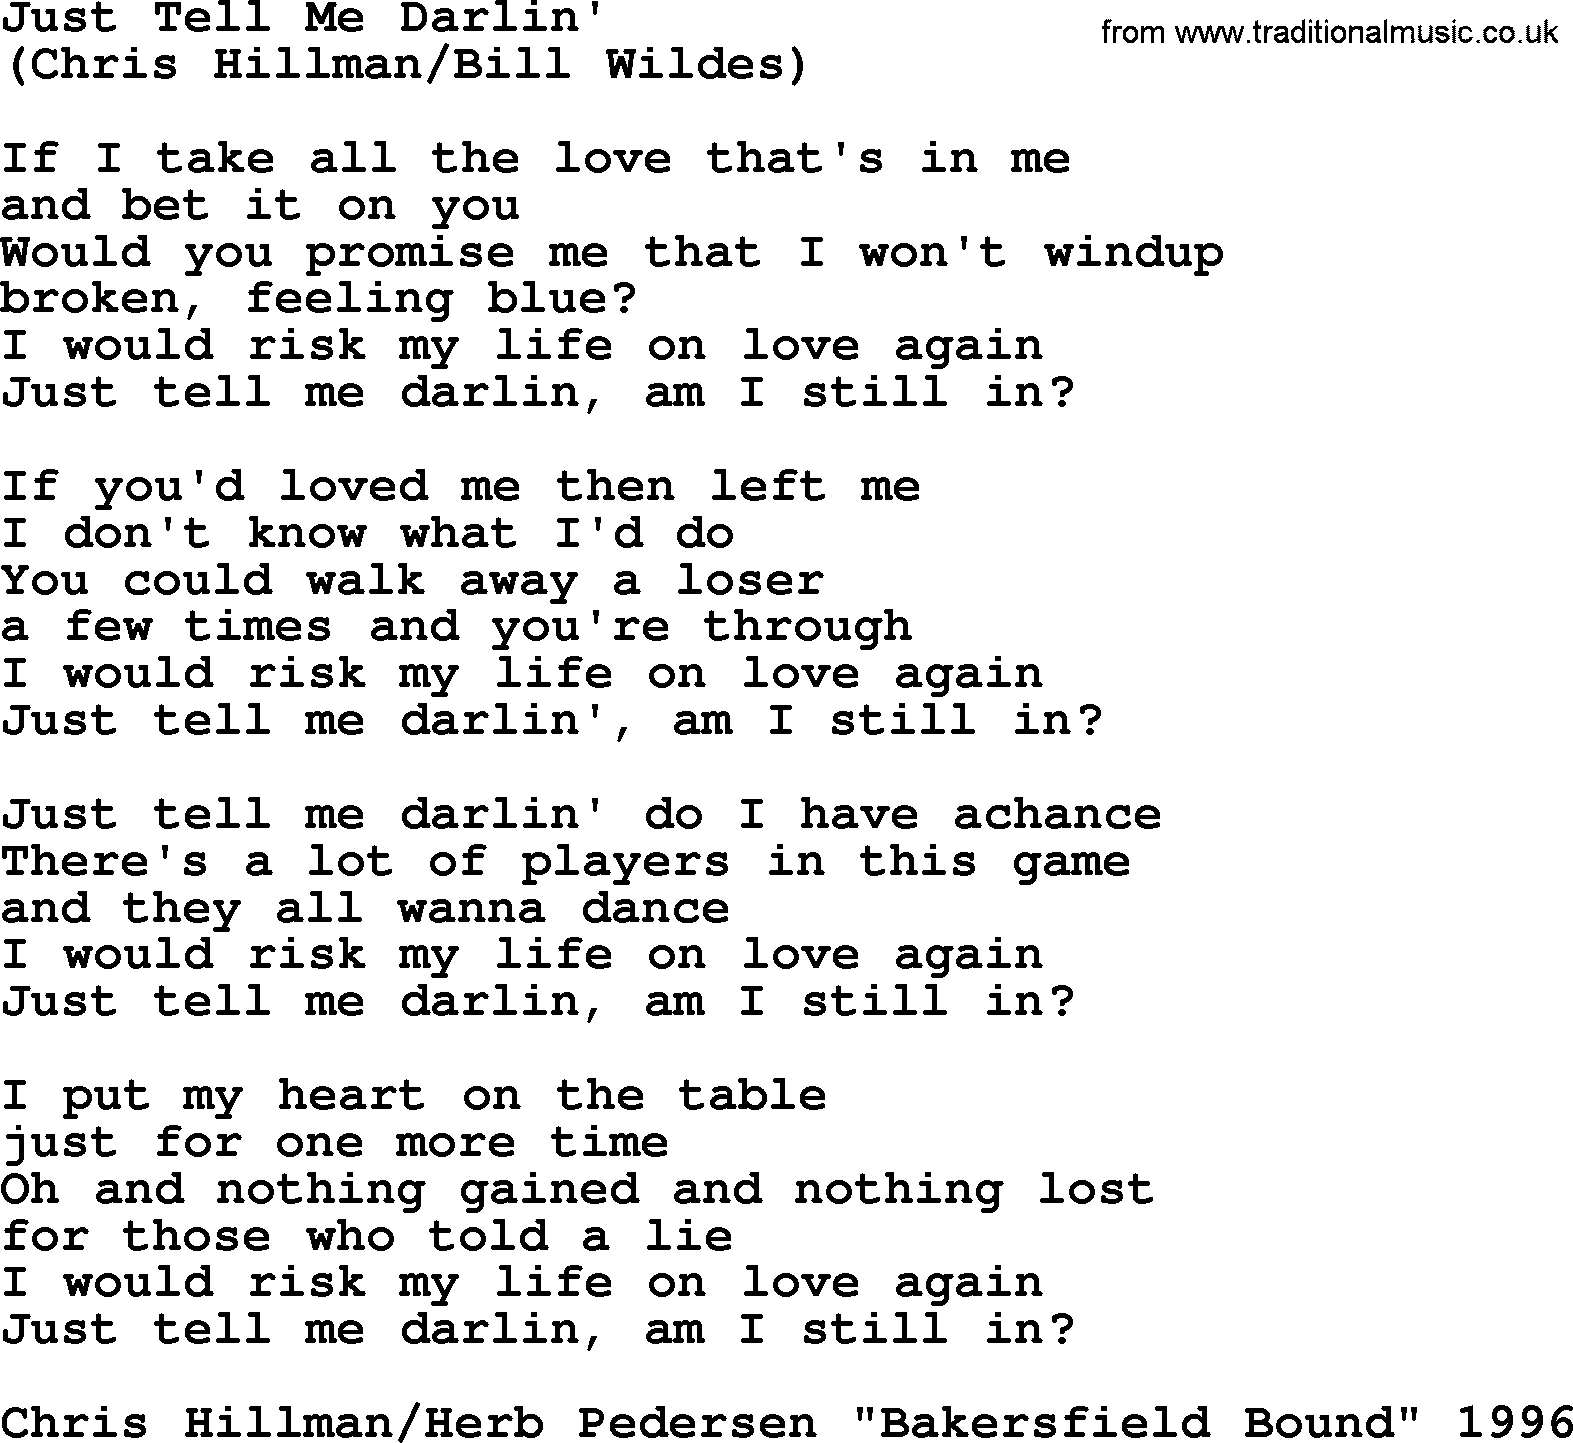 The Byrds song Just Tell Me Darlin', lyrics